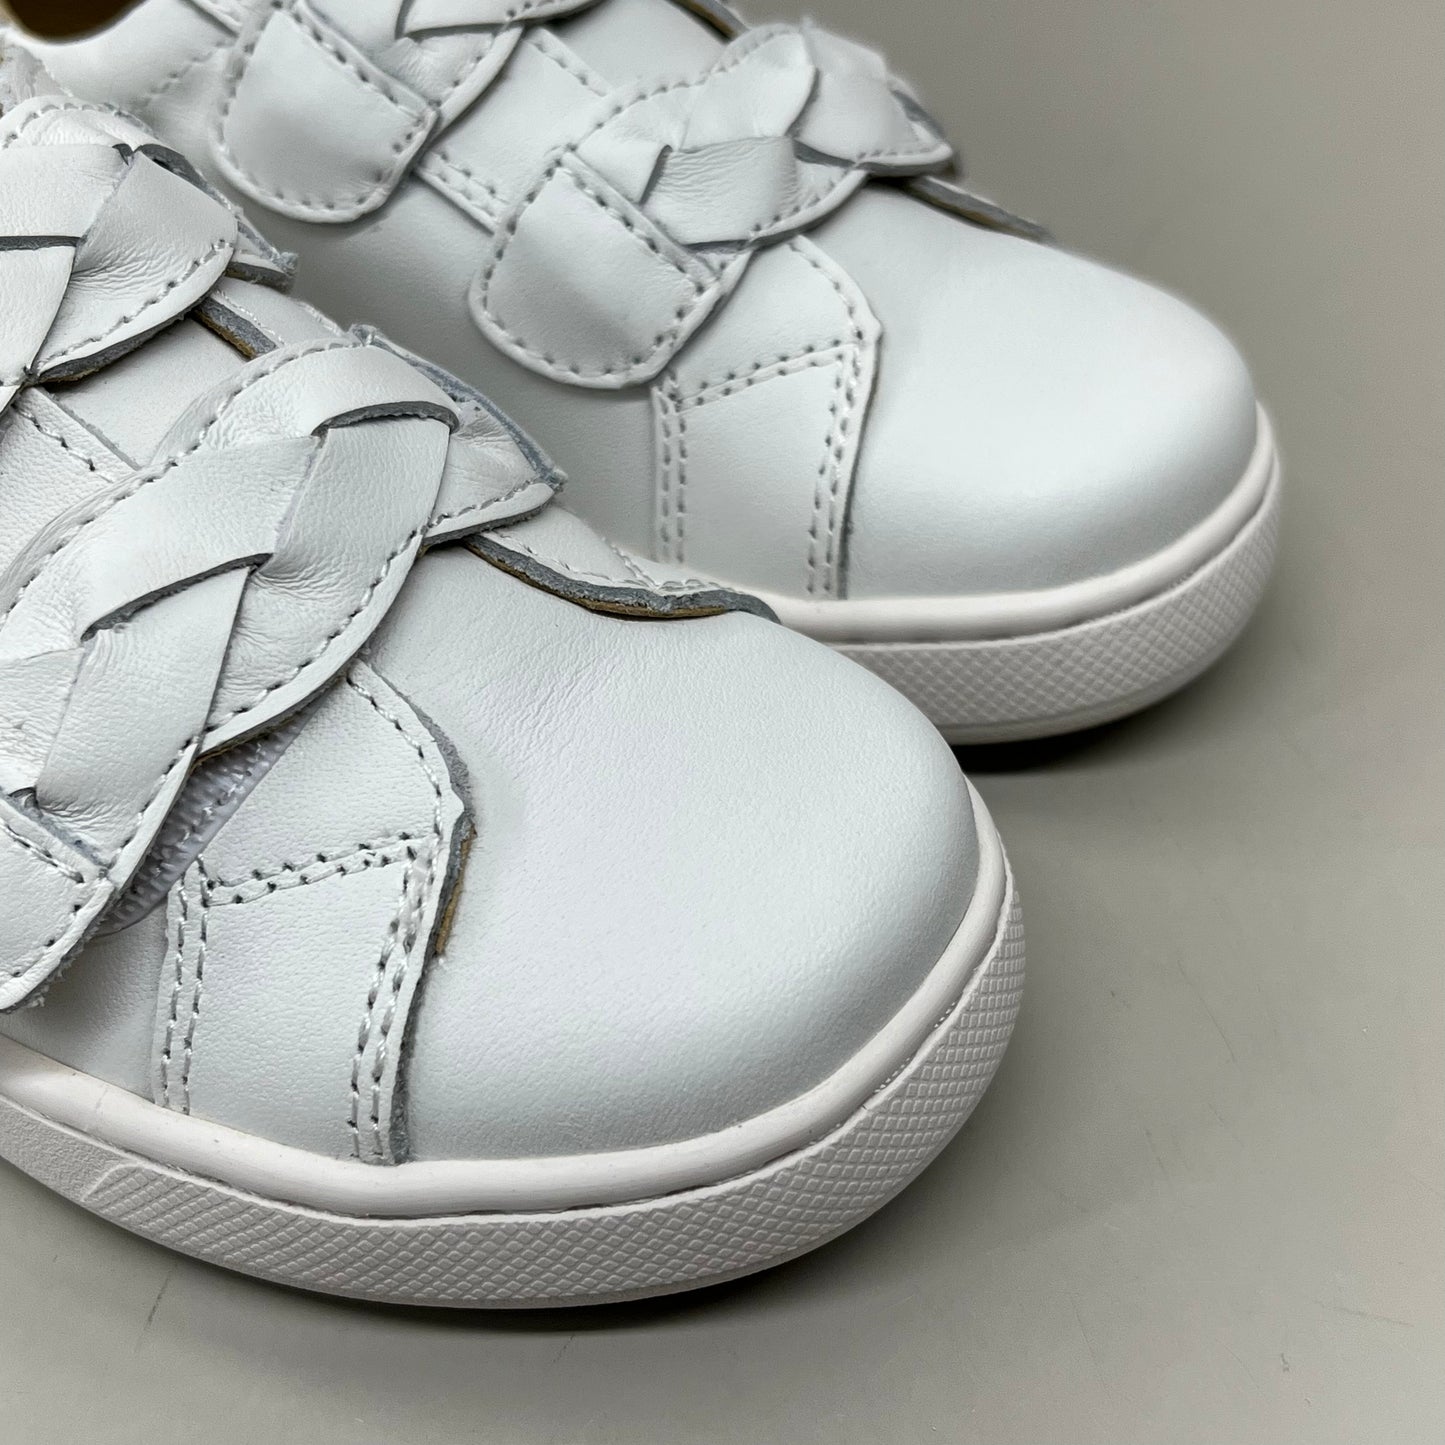 OLD SOLES Baby Plats Leather Shoe Sz 6 EU 22 Snow / Silver #6134